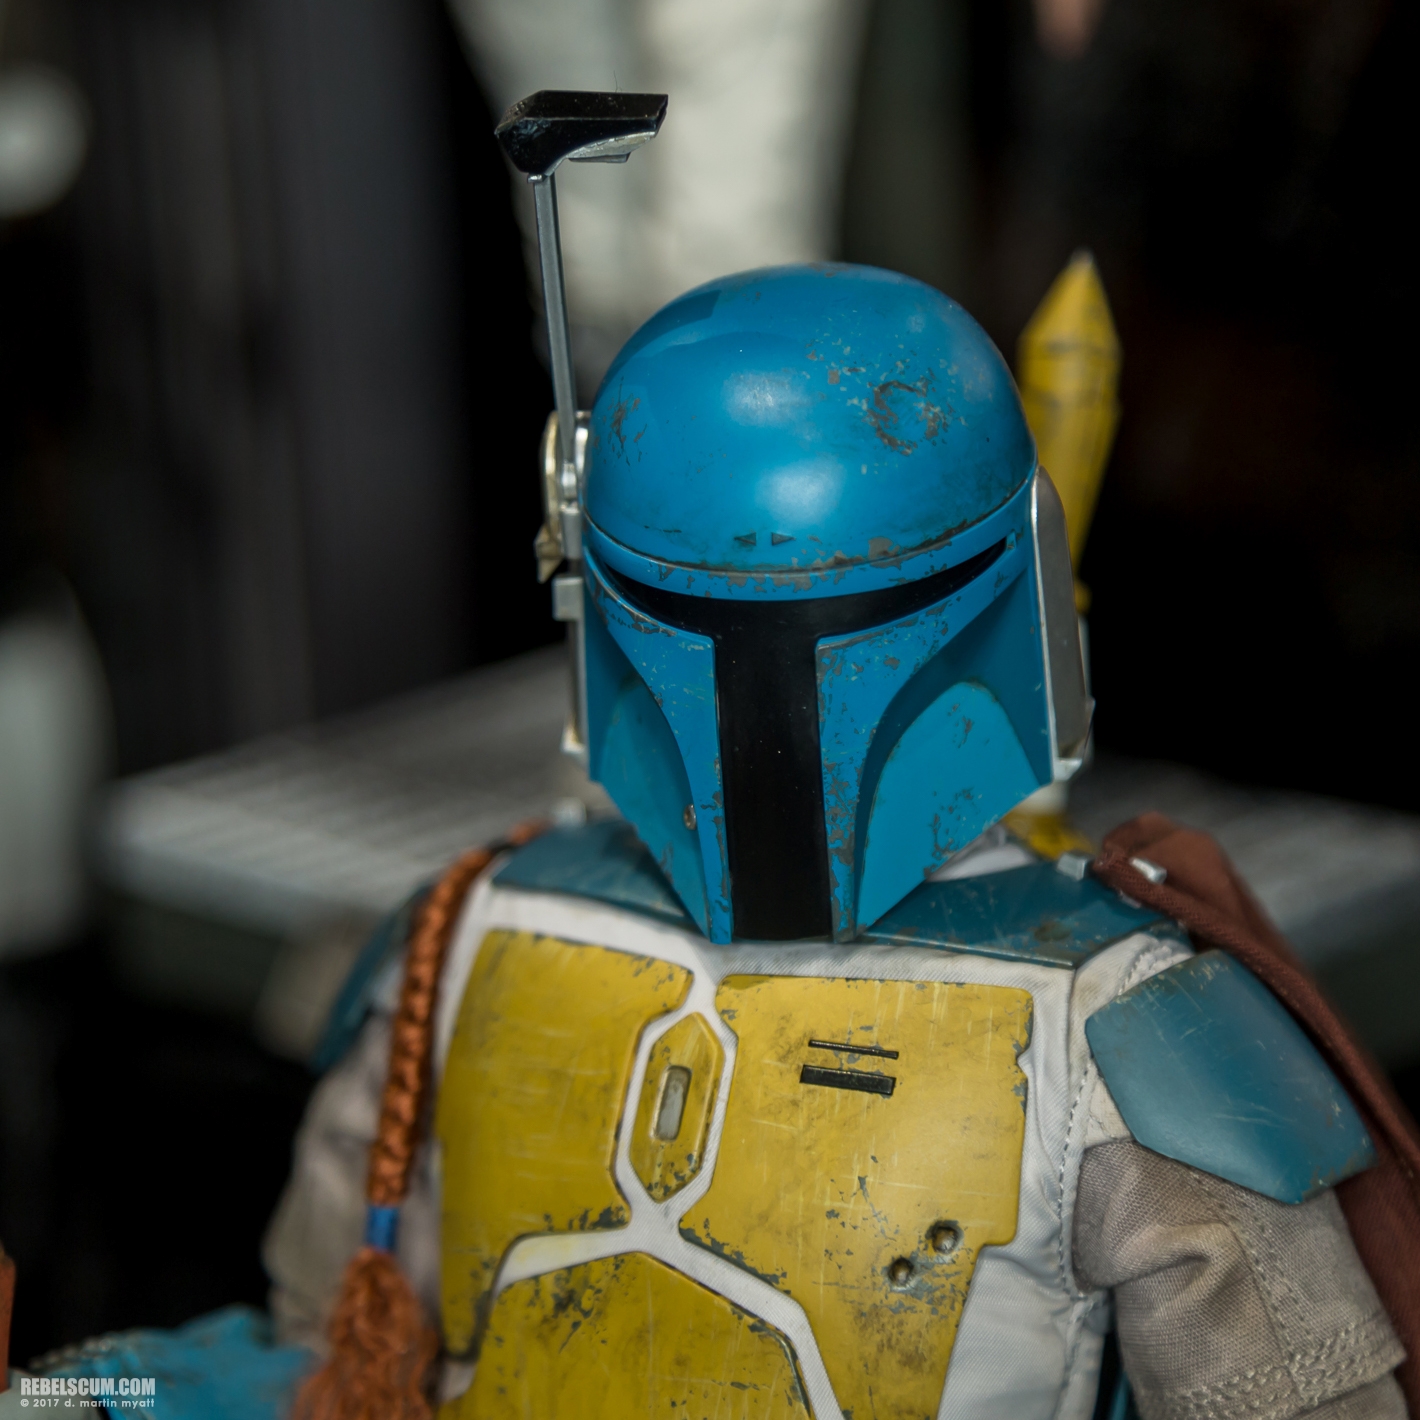 San-Diego-Comic-Con-2017-Hot-Toys-Star-Wars-157.jpg